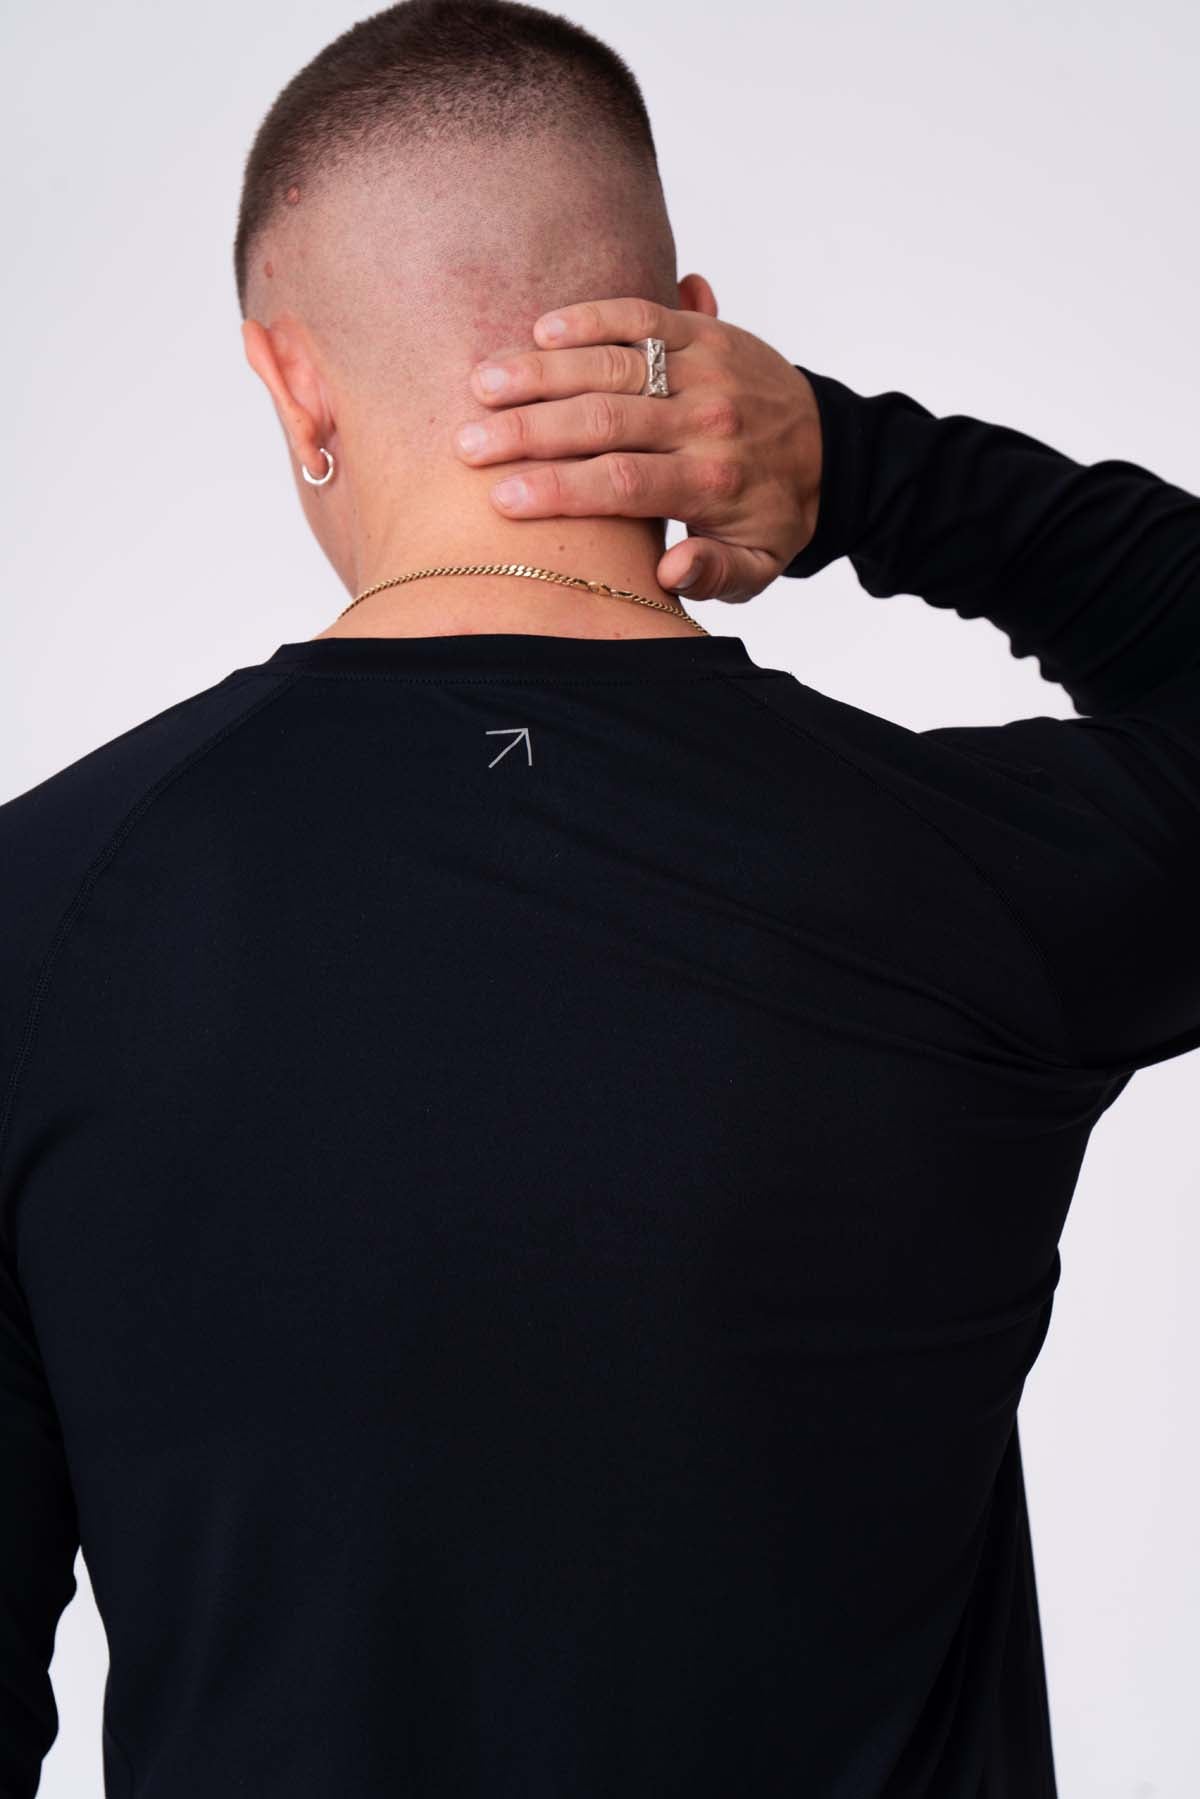 Alaise Active Long Sleeve Shirt - Black